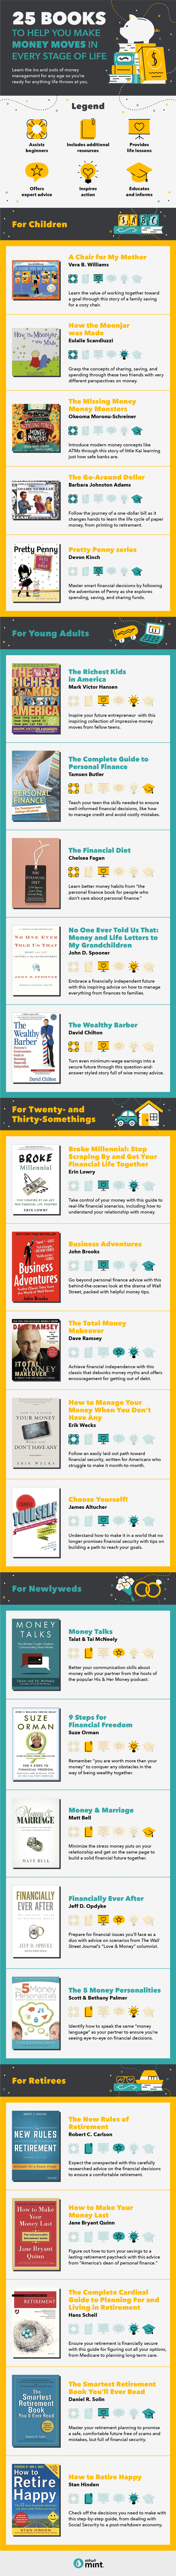 books that help you make money